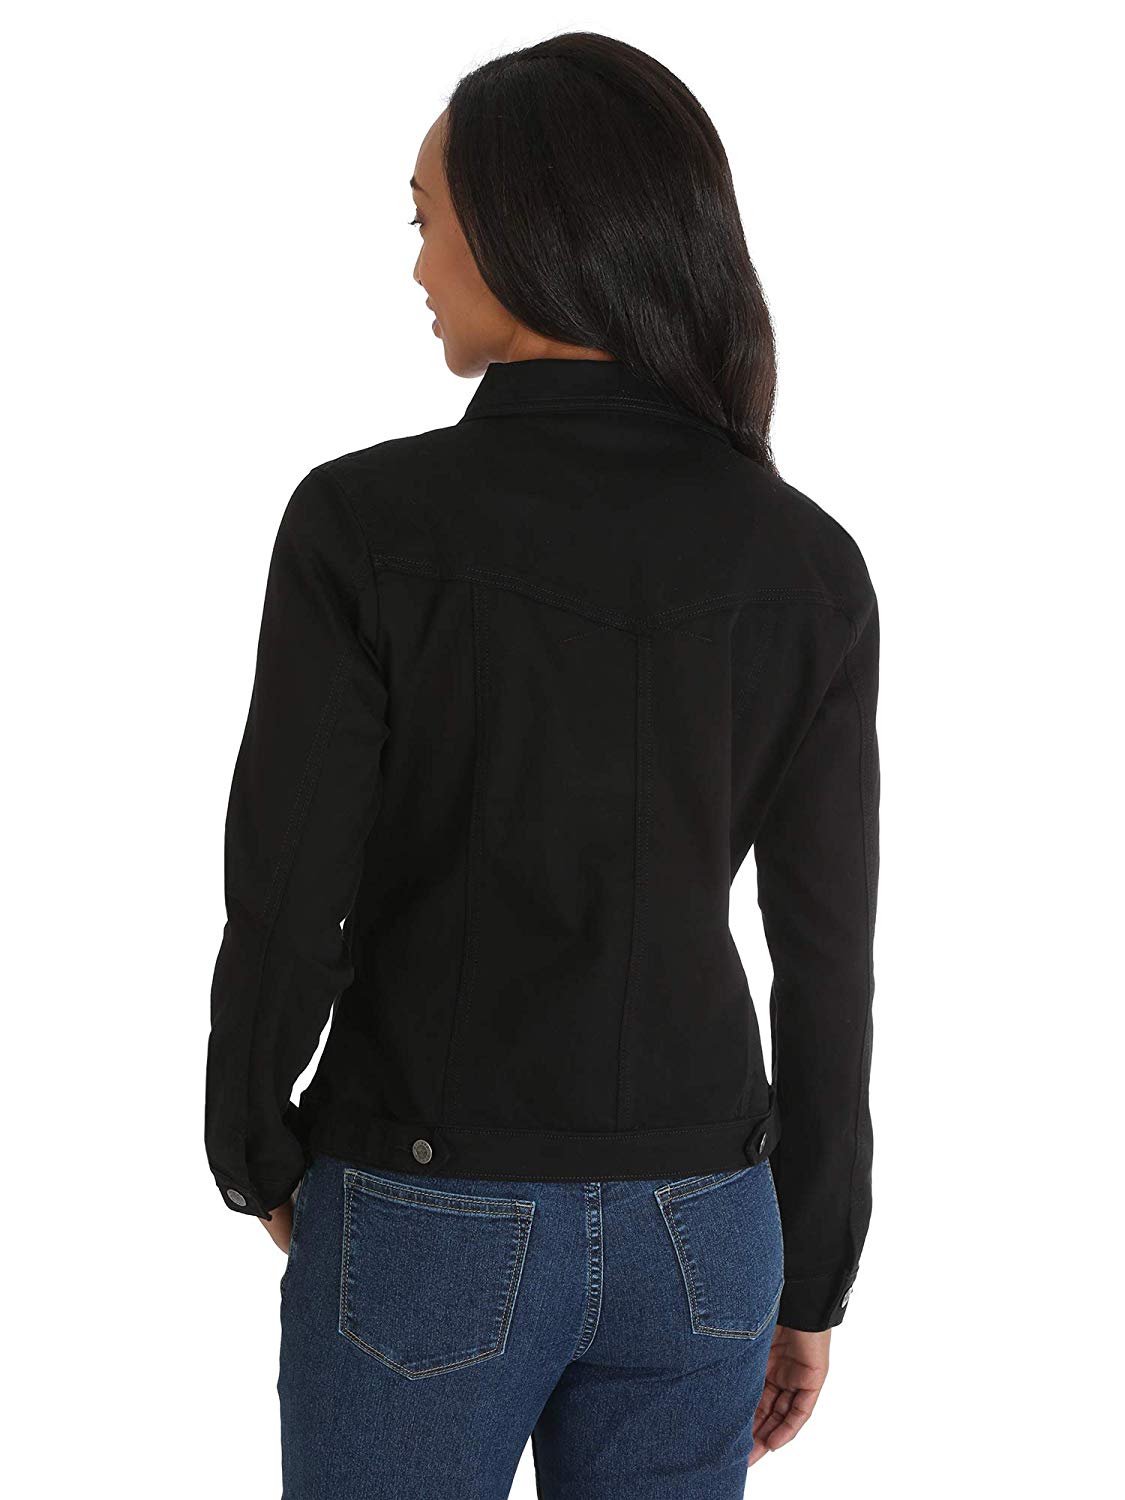 Riders by Lee Indigo Women's Denim Jacket, Black, Large, Black, Size ...